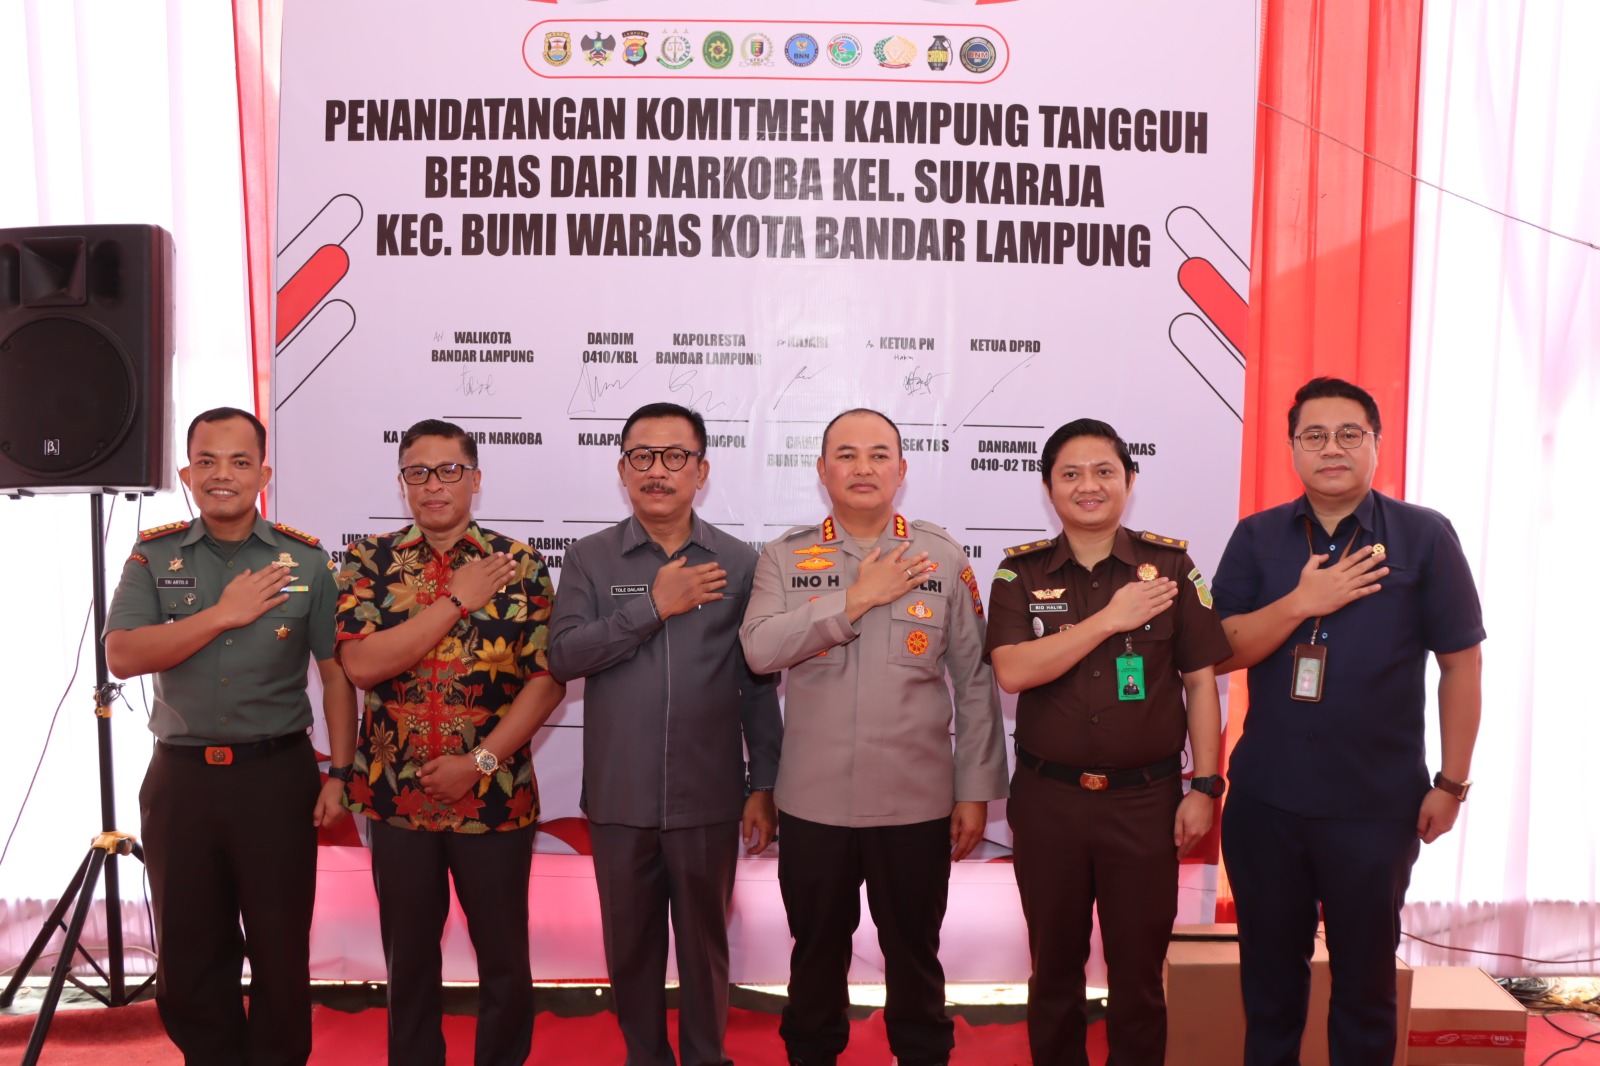 Resmikan Kampung Tangguh Bebas Dari Narkoba, Kapolresta Bandar Lampung : Kita Mulai Dari Sukaraja Untuk Bandar Lampung Yang Lebih Baik Lagi